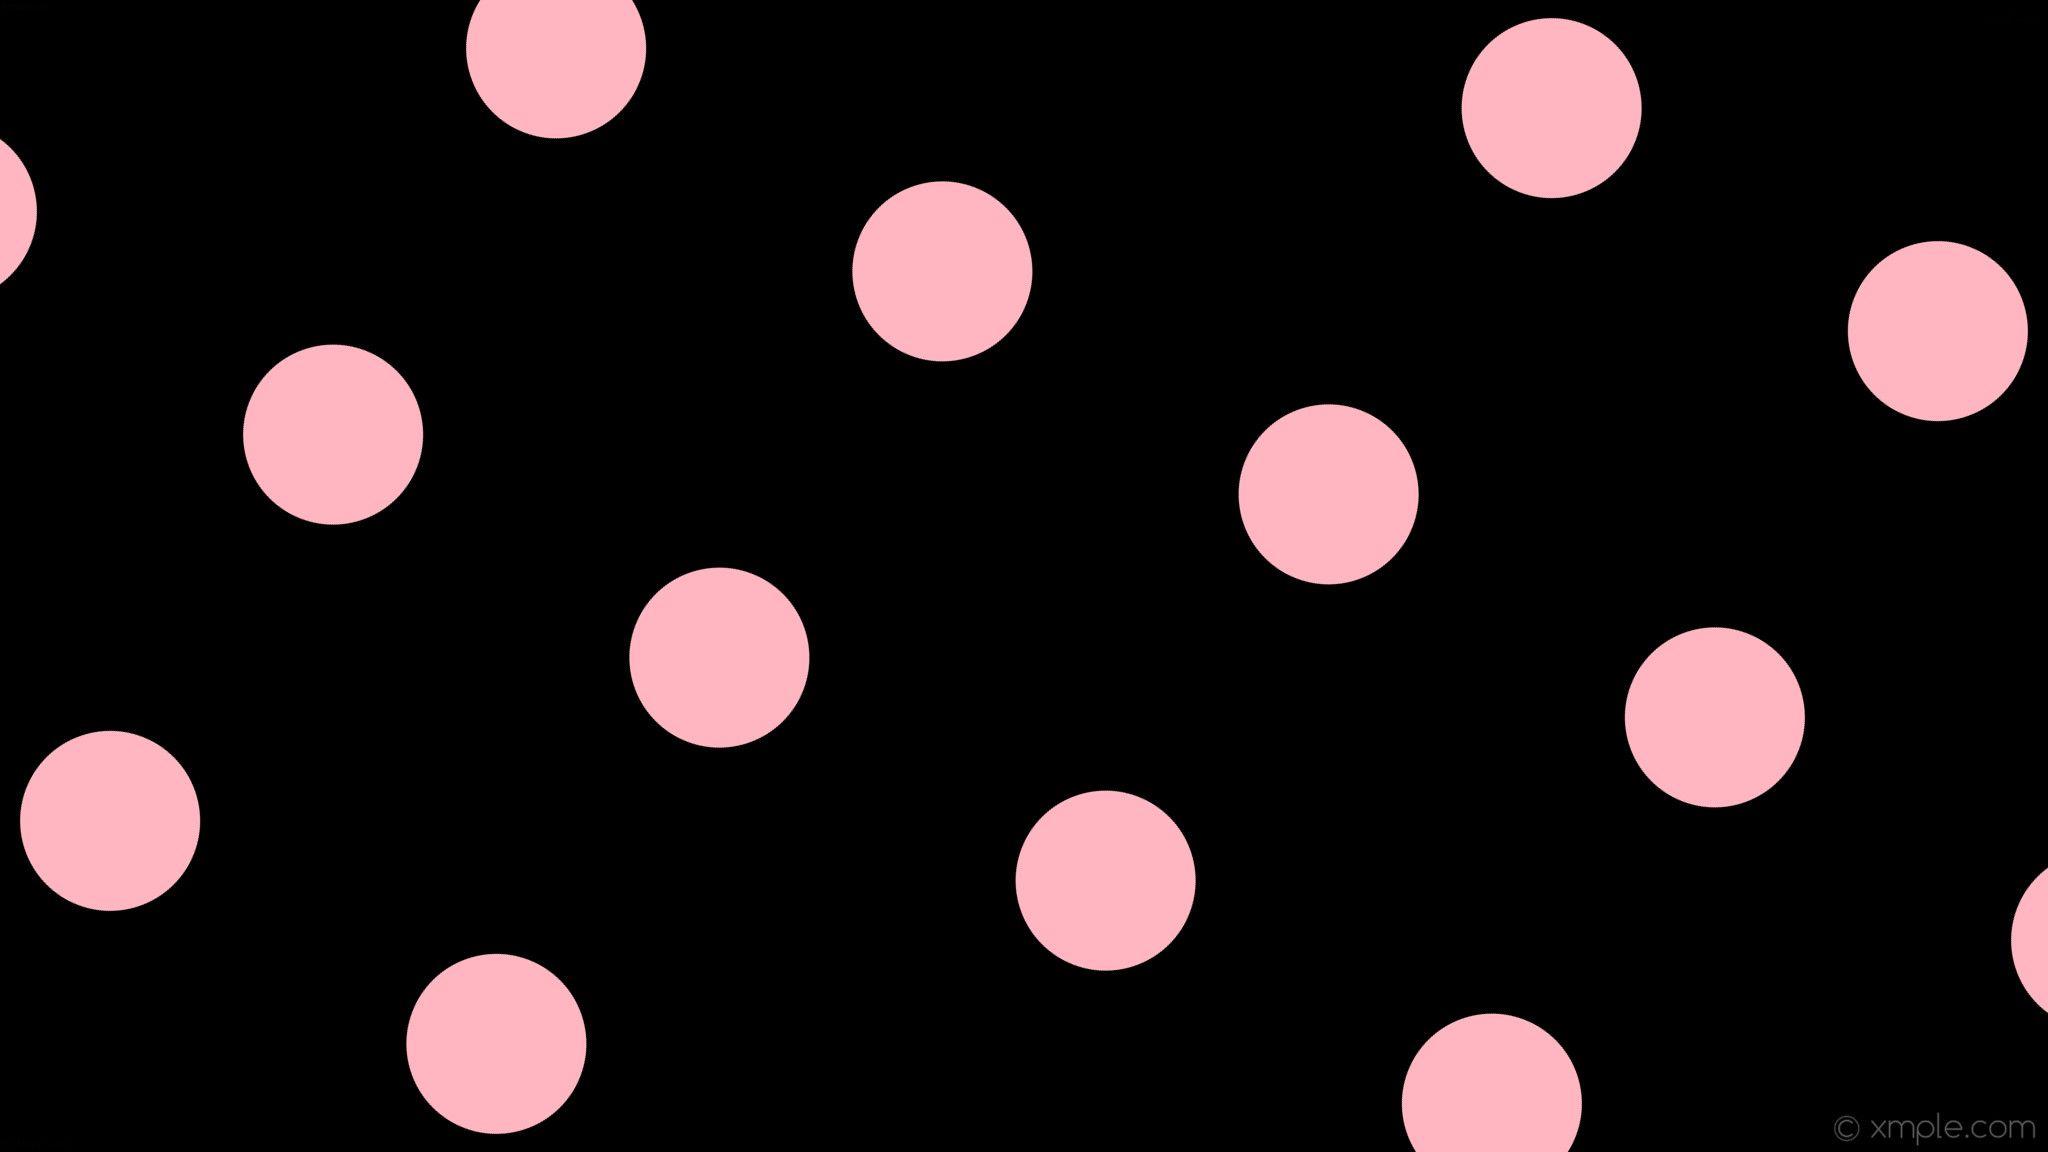 Light Pink 2048X1152 Wallpapers - Top Free Light Pink 2048X1152